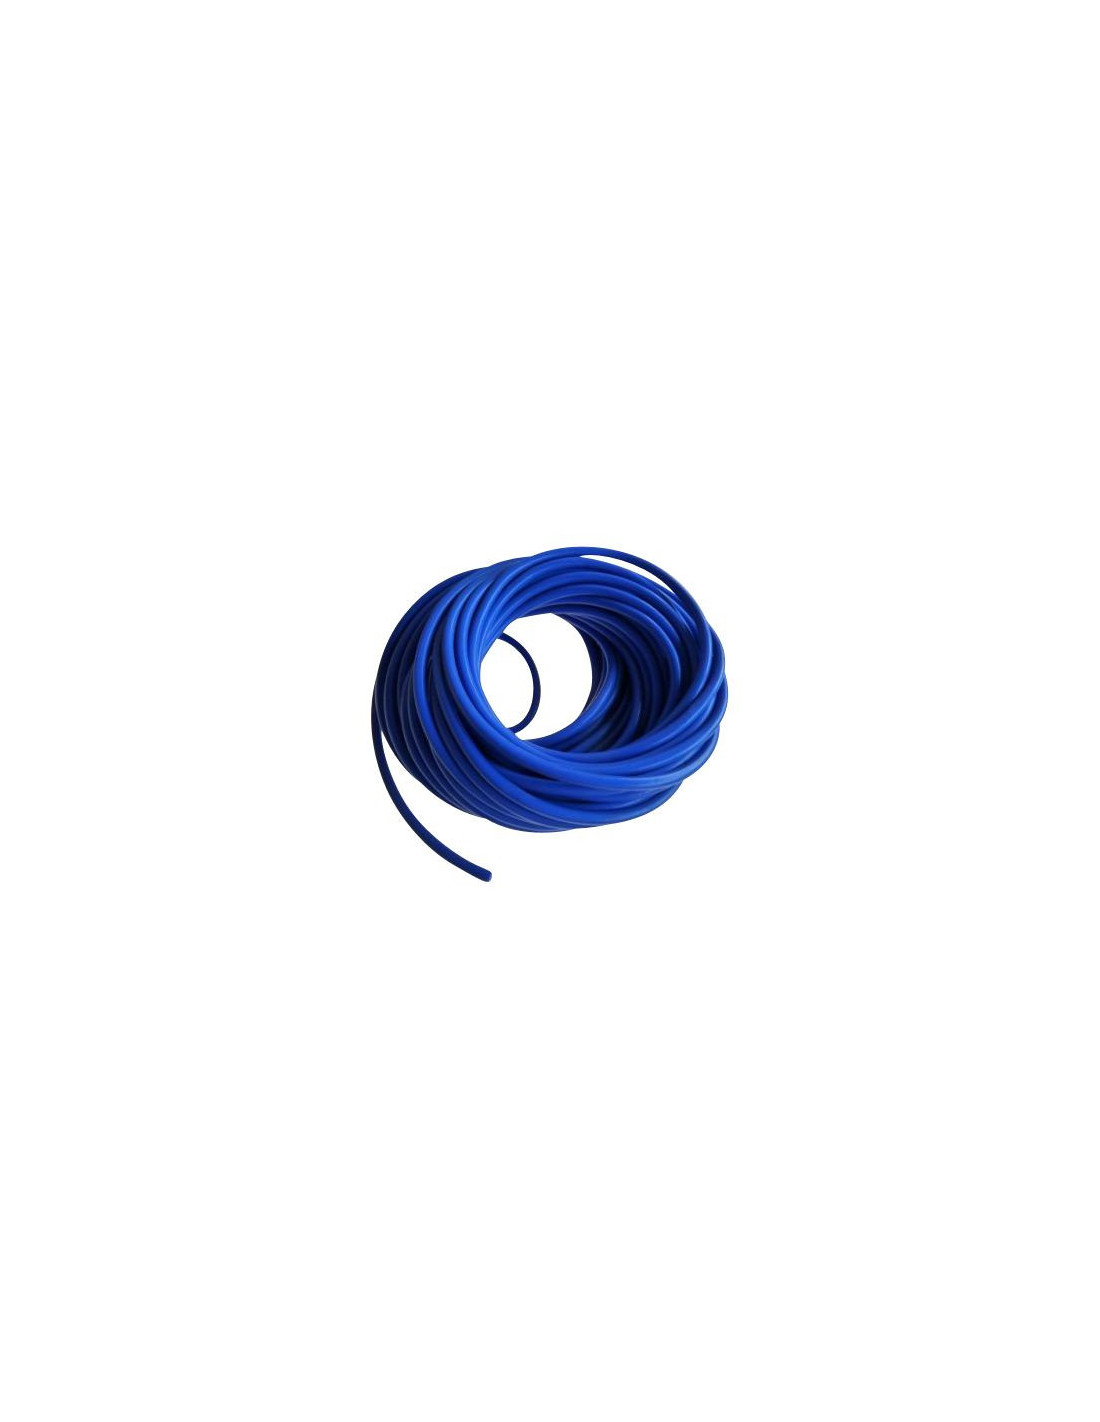 Tubo de Vacio en Silicona Silicon Hoses 3mm Longitud 3m Azul - Gt2i España